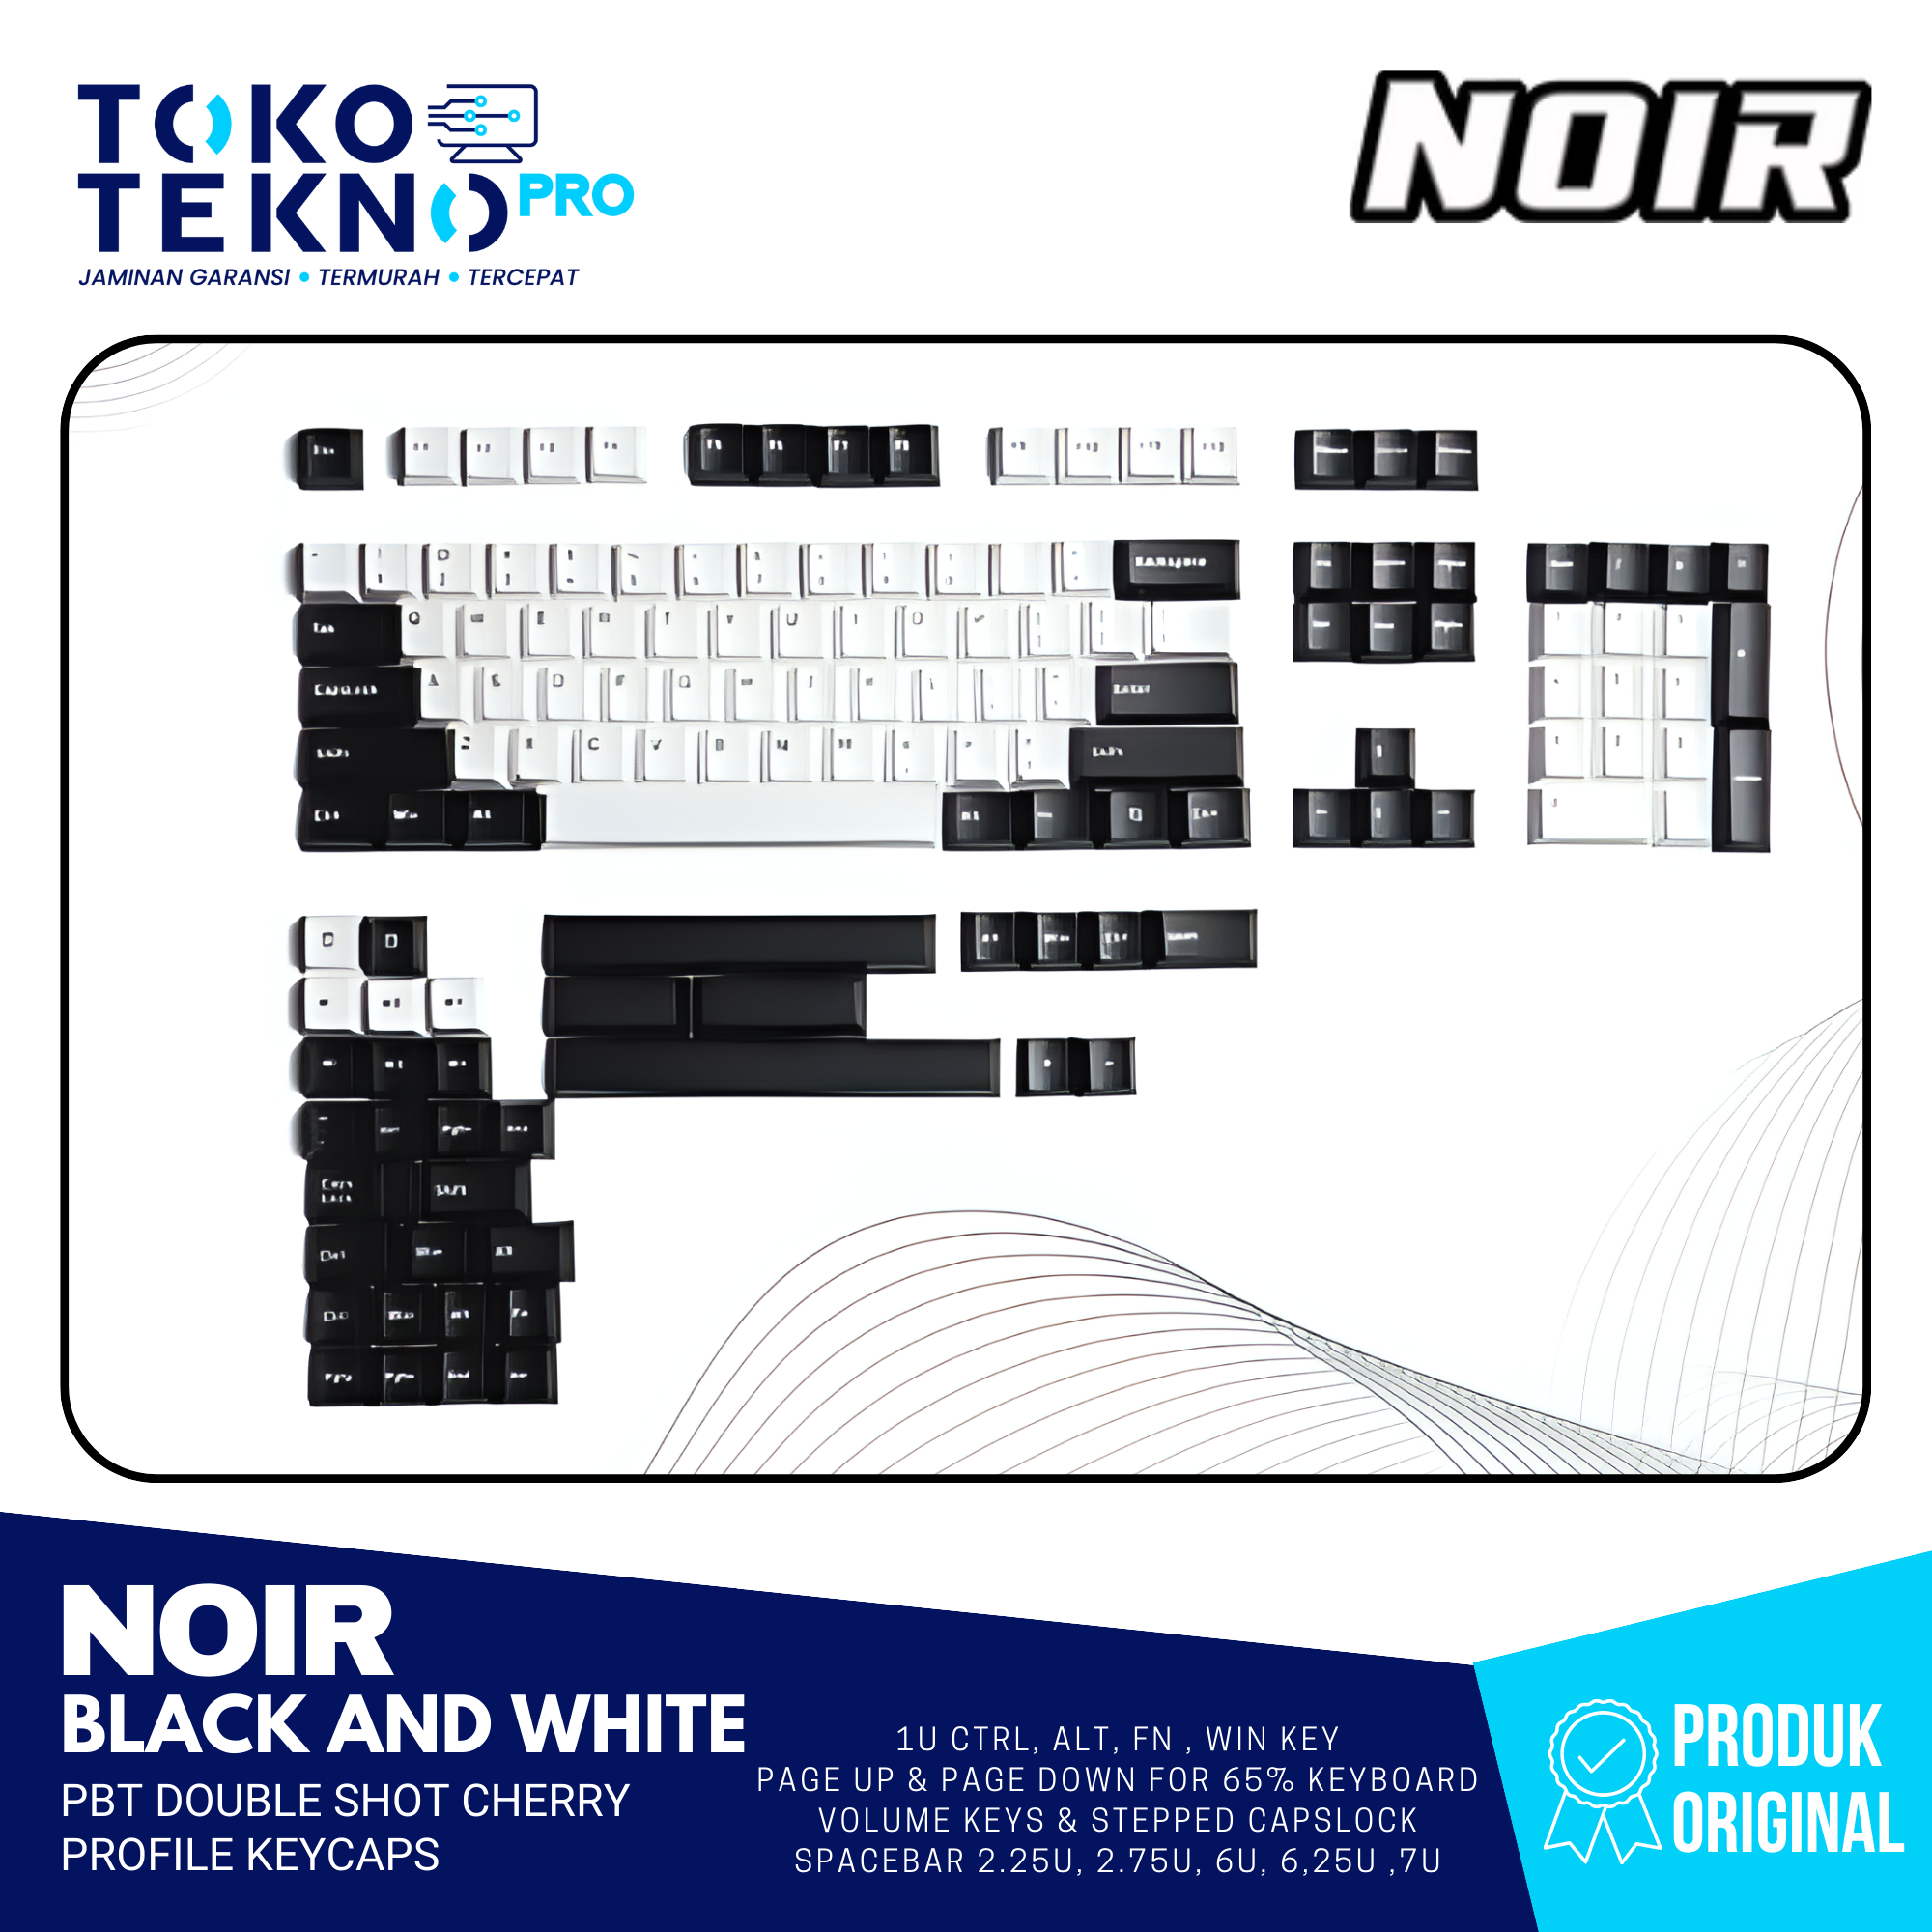 Noir Black and White PBT Double Shot Cherry Profile Keycaps